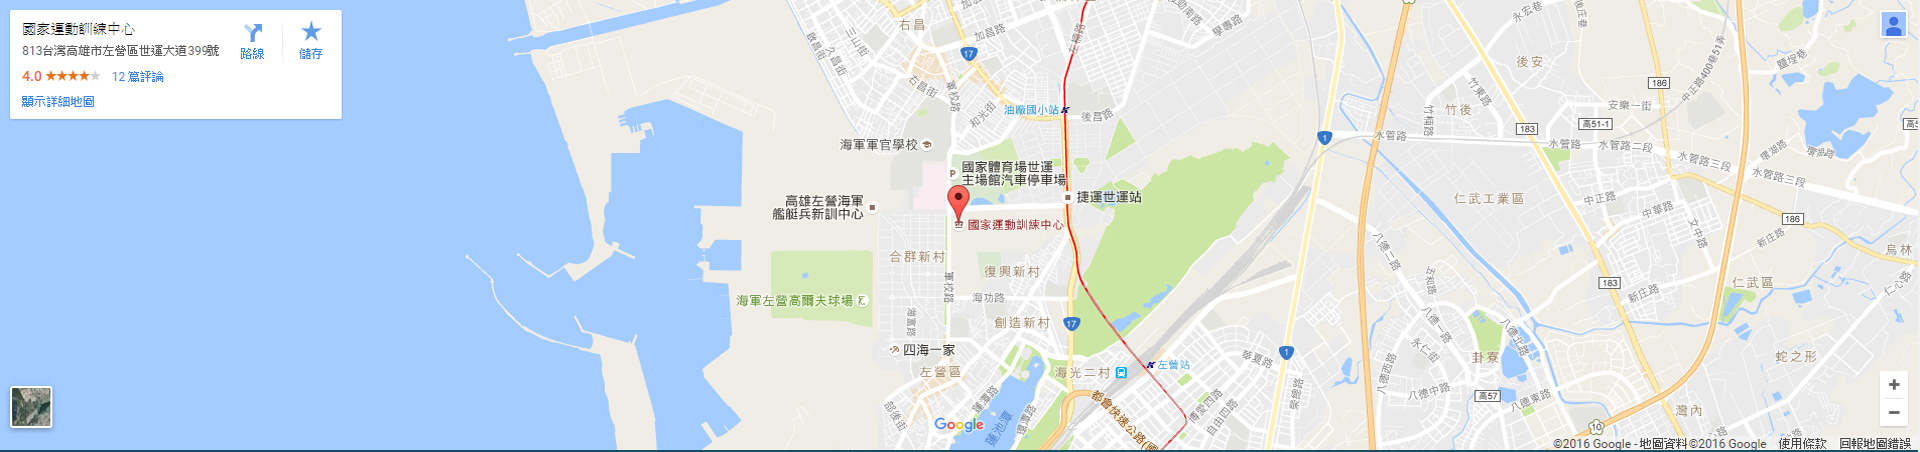 No.399, Shiyun Blvd., Zuoying Dist., Kaohsiung City 813, Taiwan (R.O.C.)